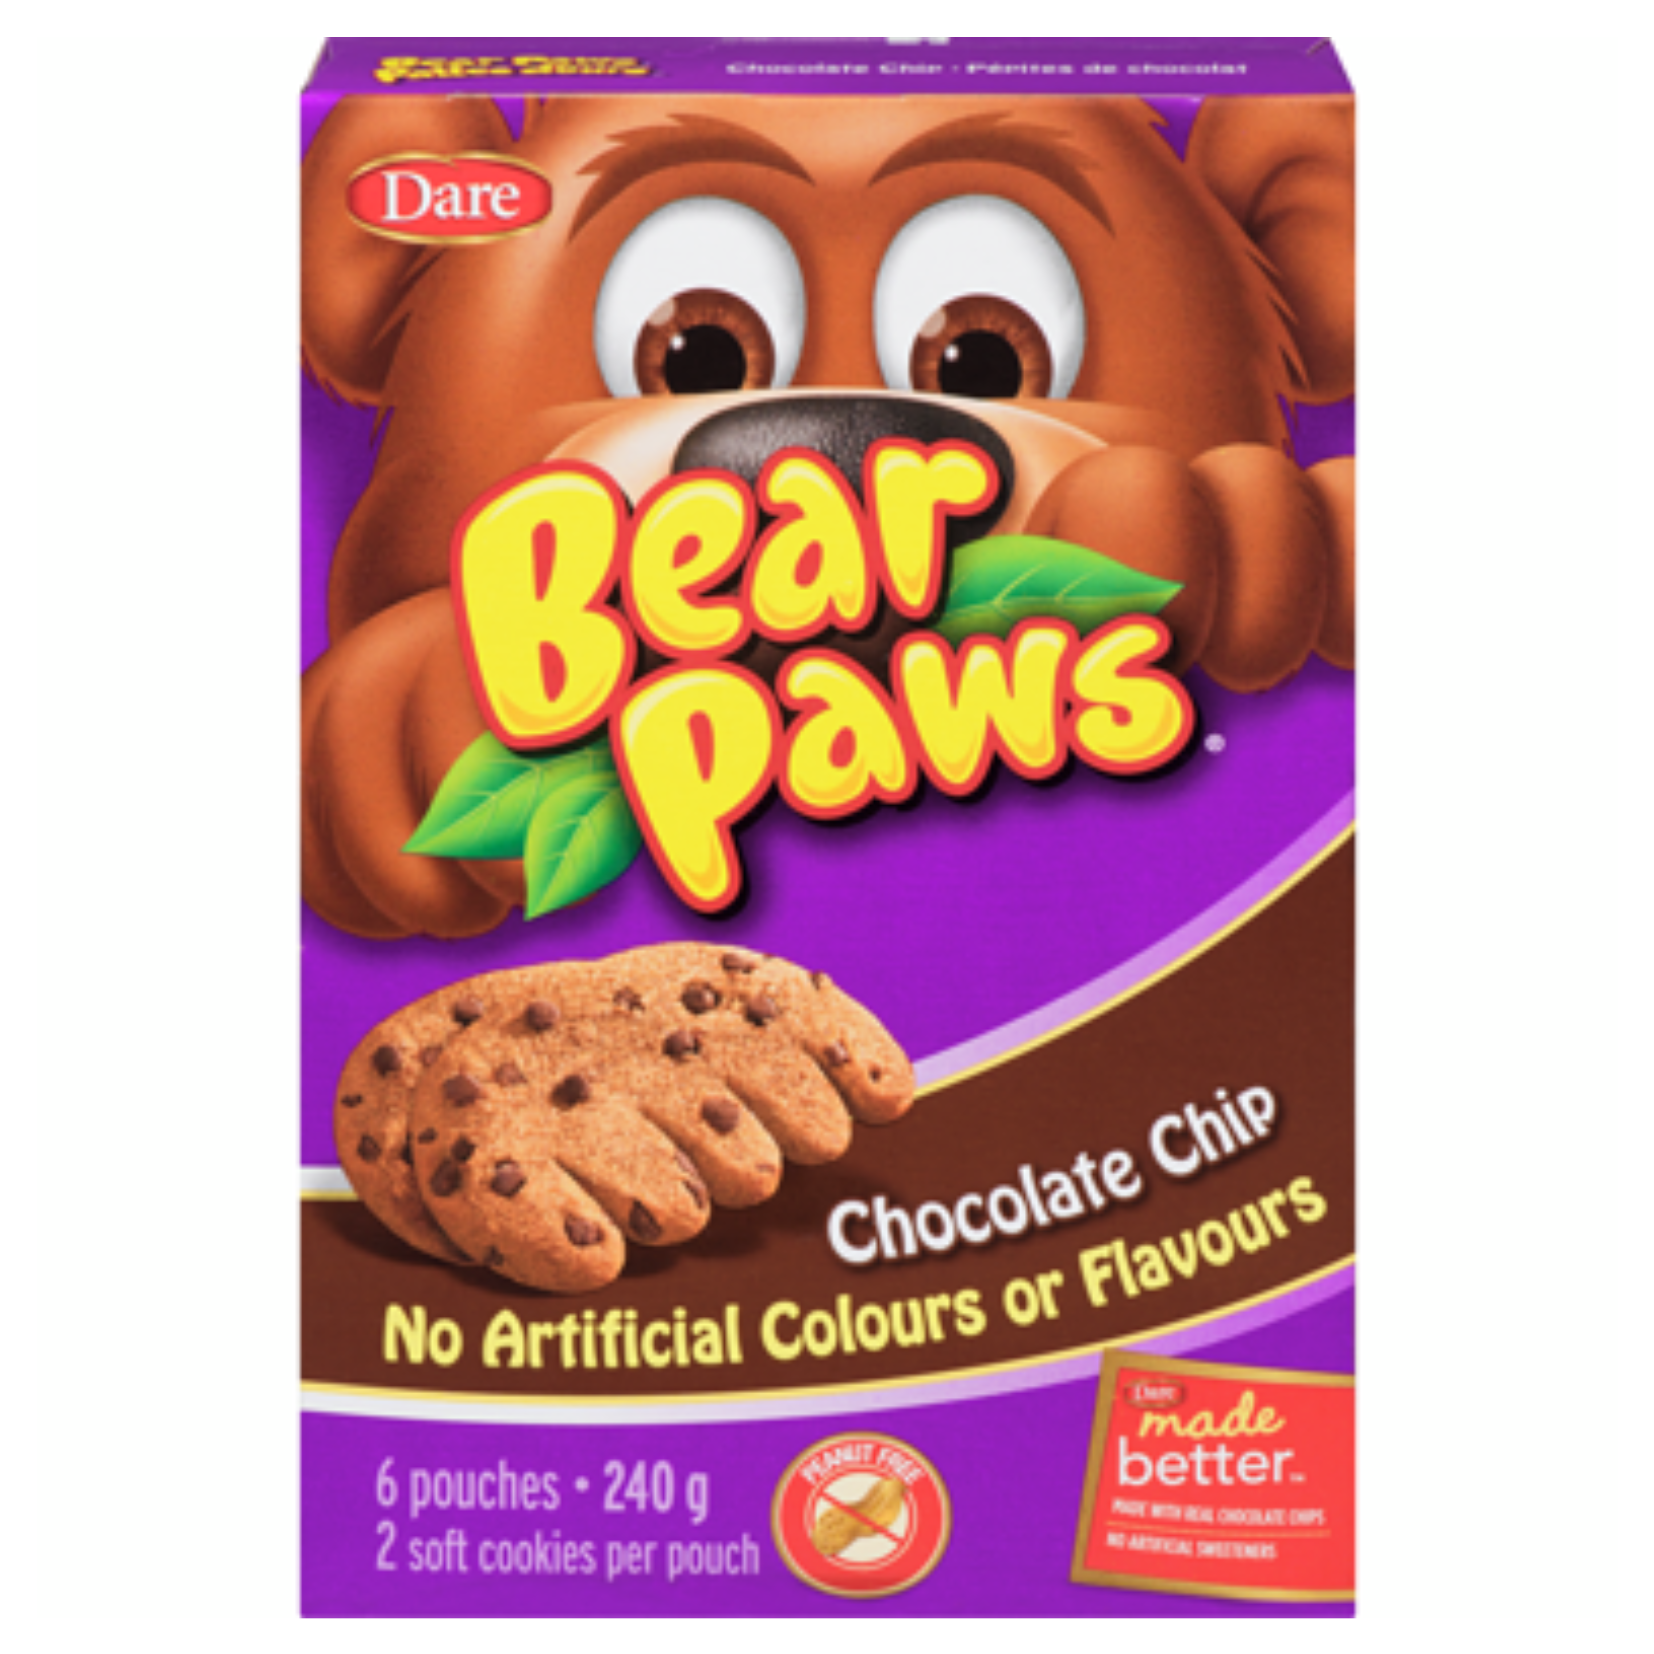 Dare Bear Paws Chocolate Chip Cookies 40g x 6